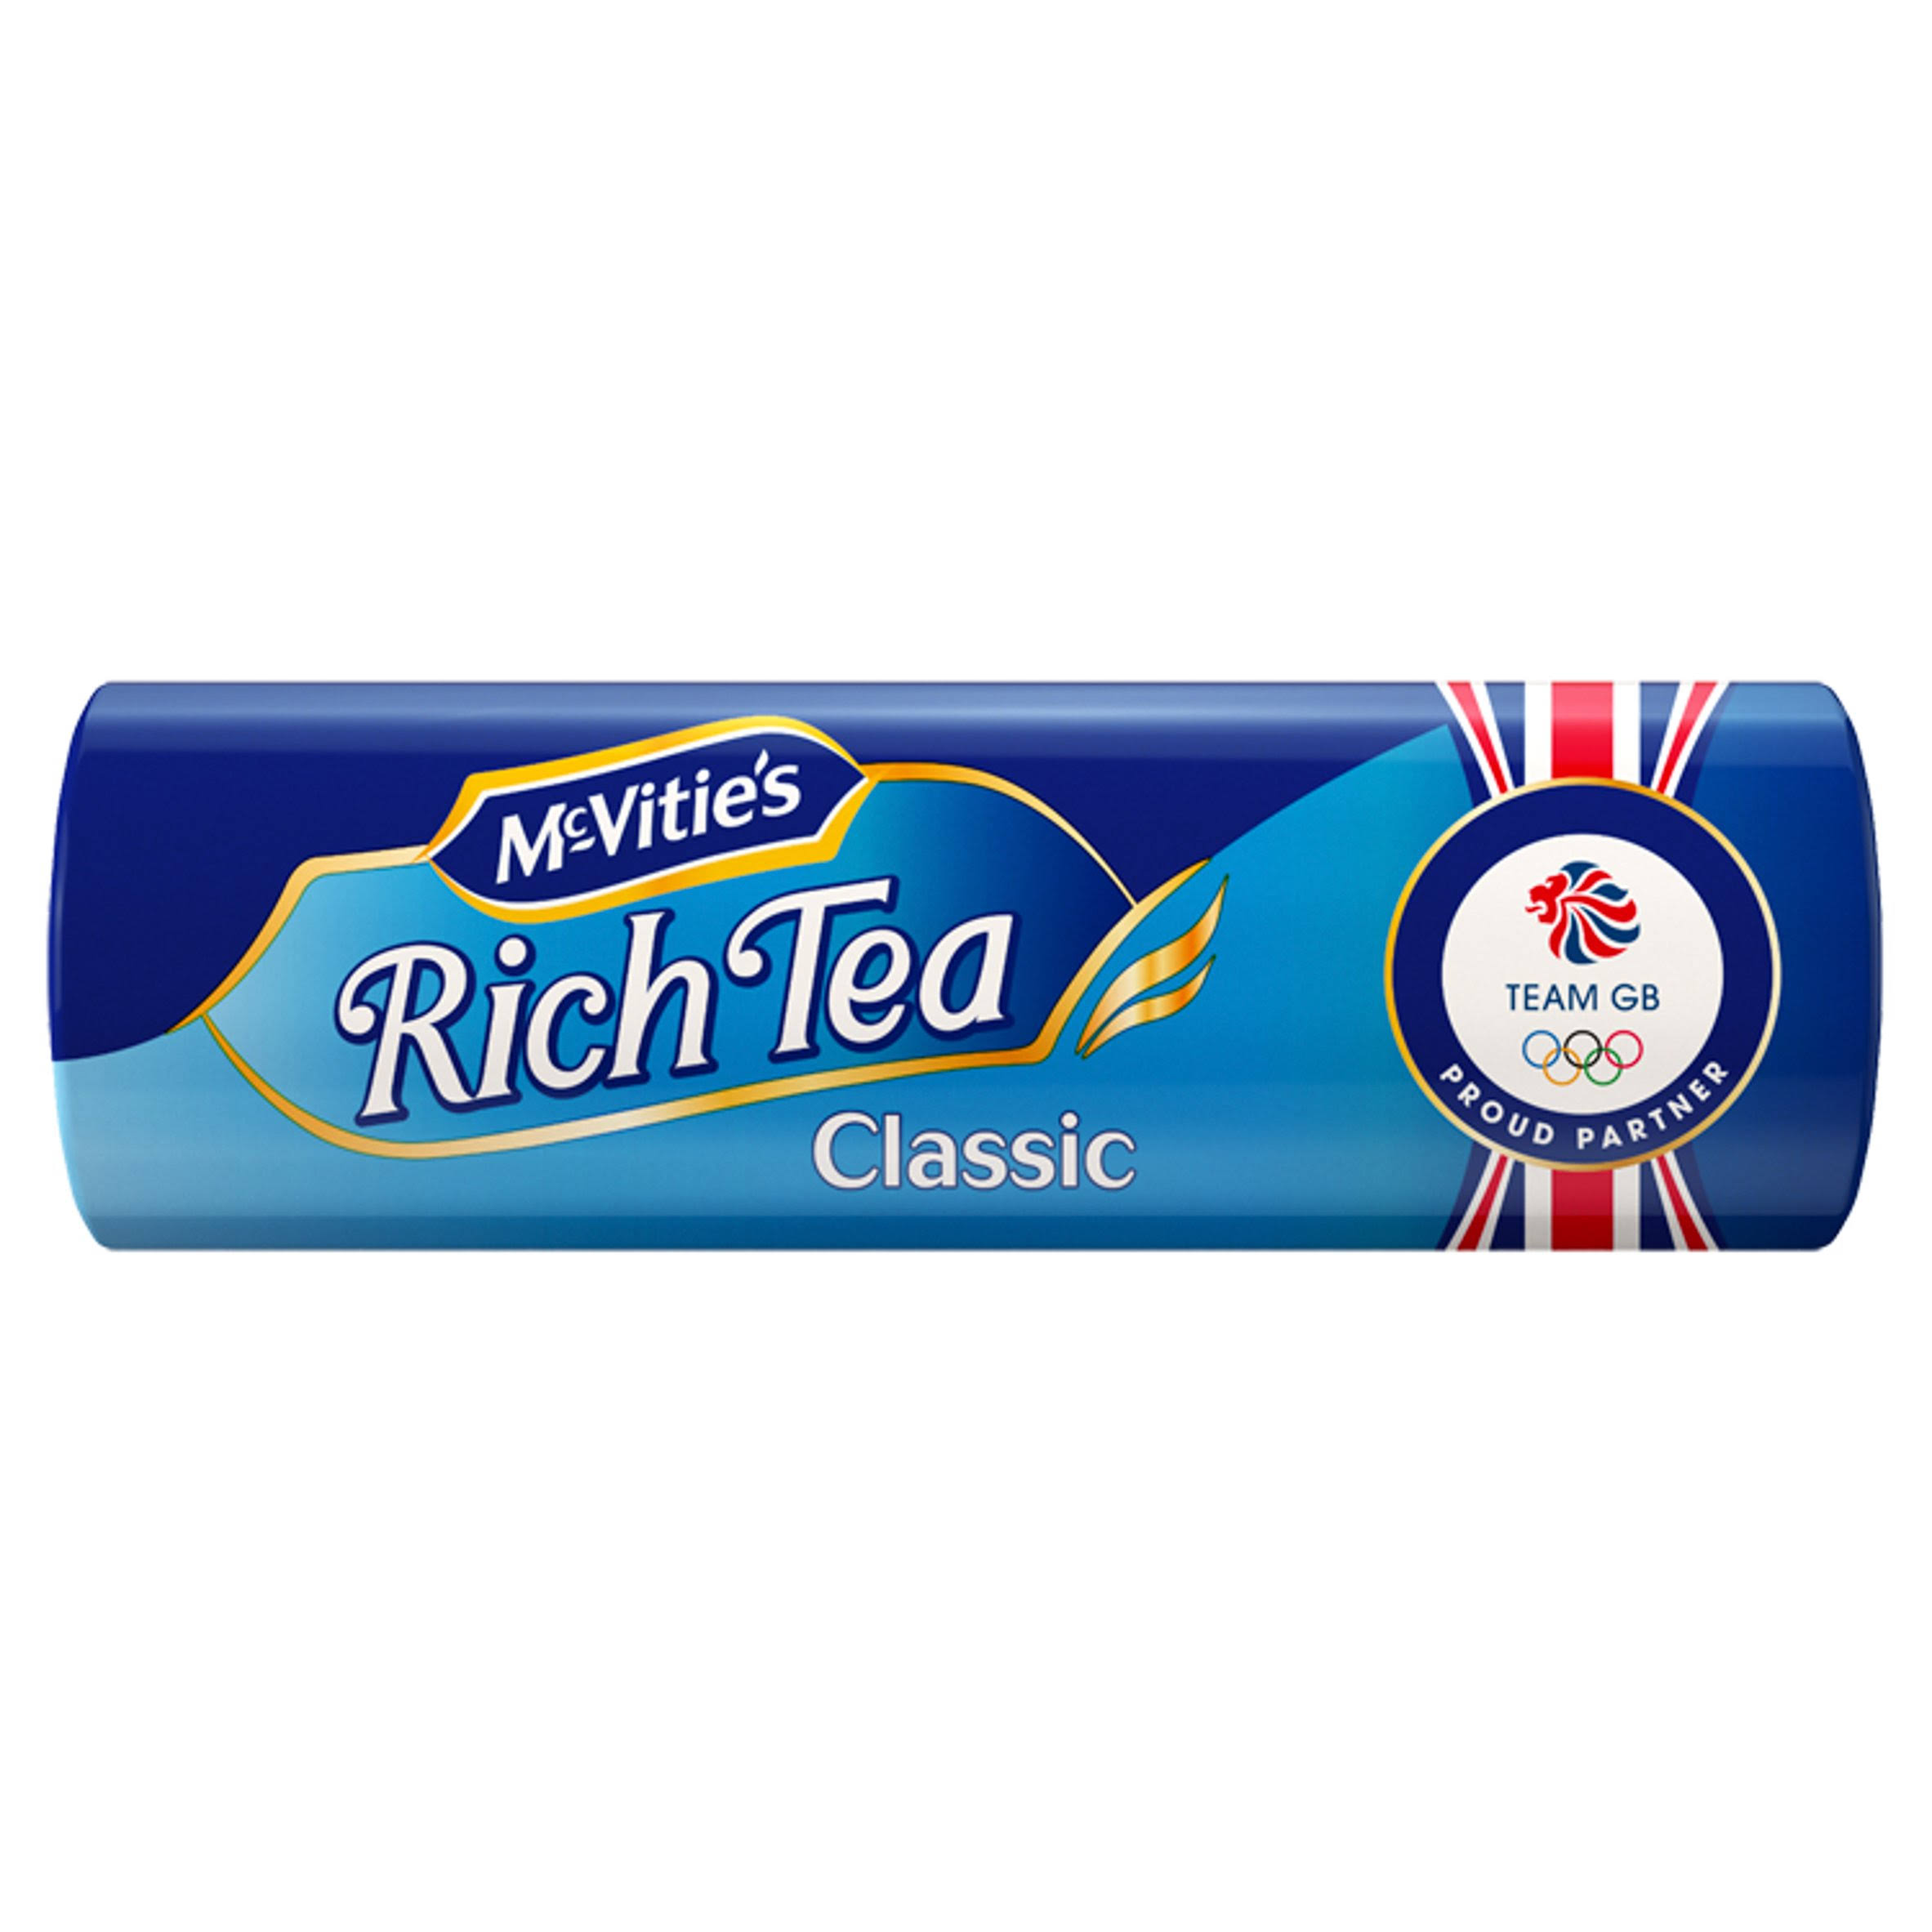 McVitie's Rich Tea Classic Biscuits - 300g